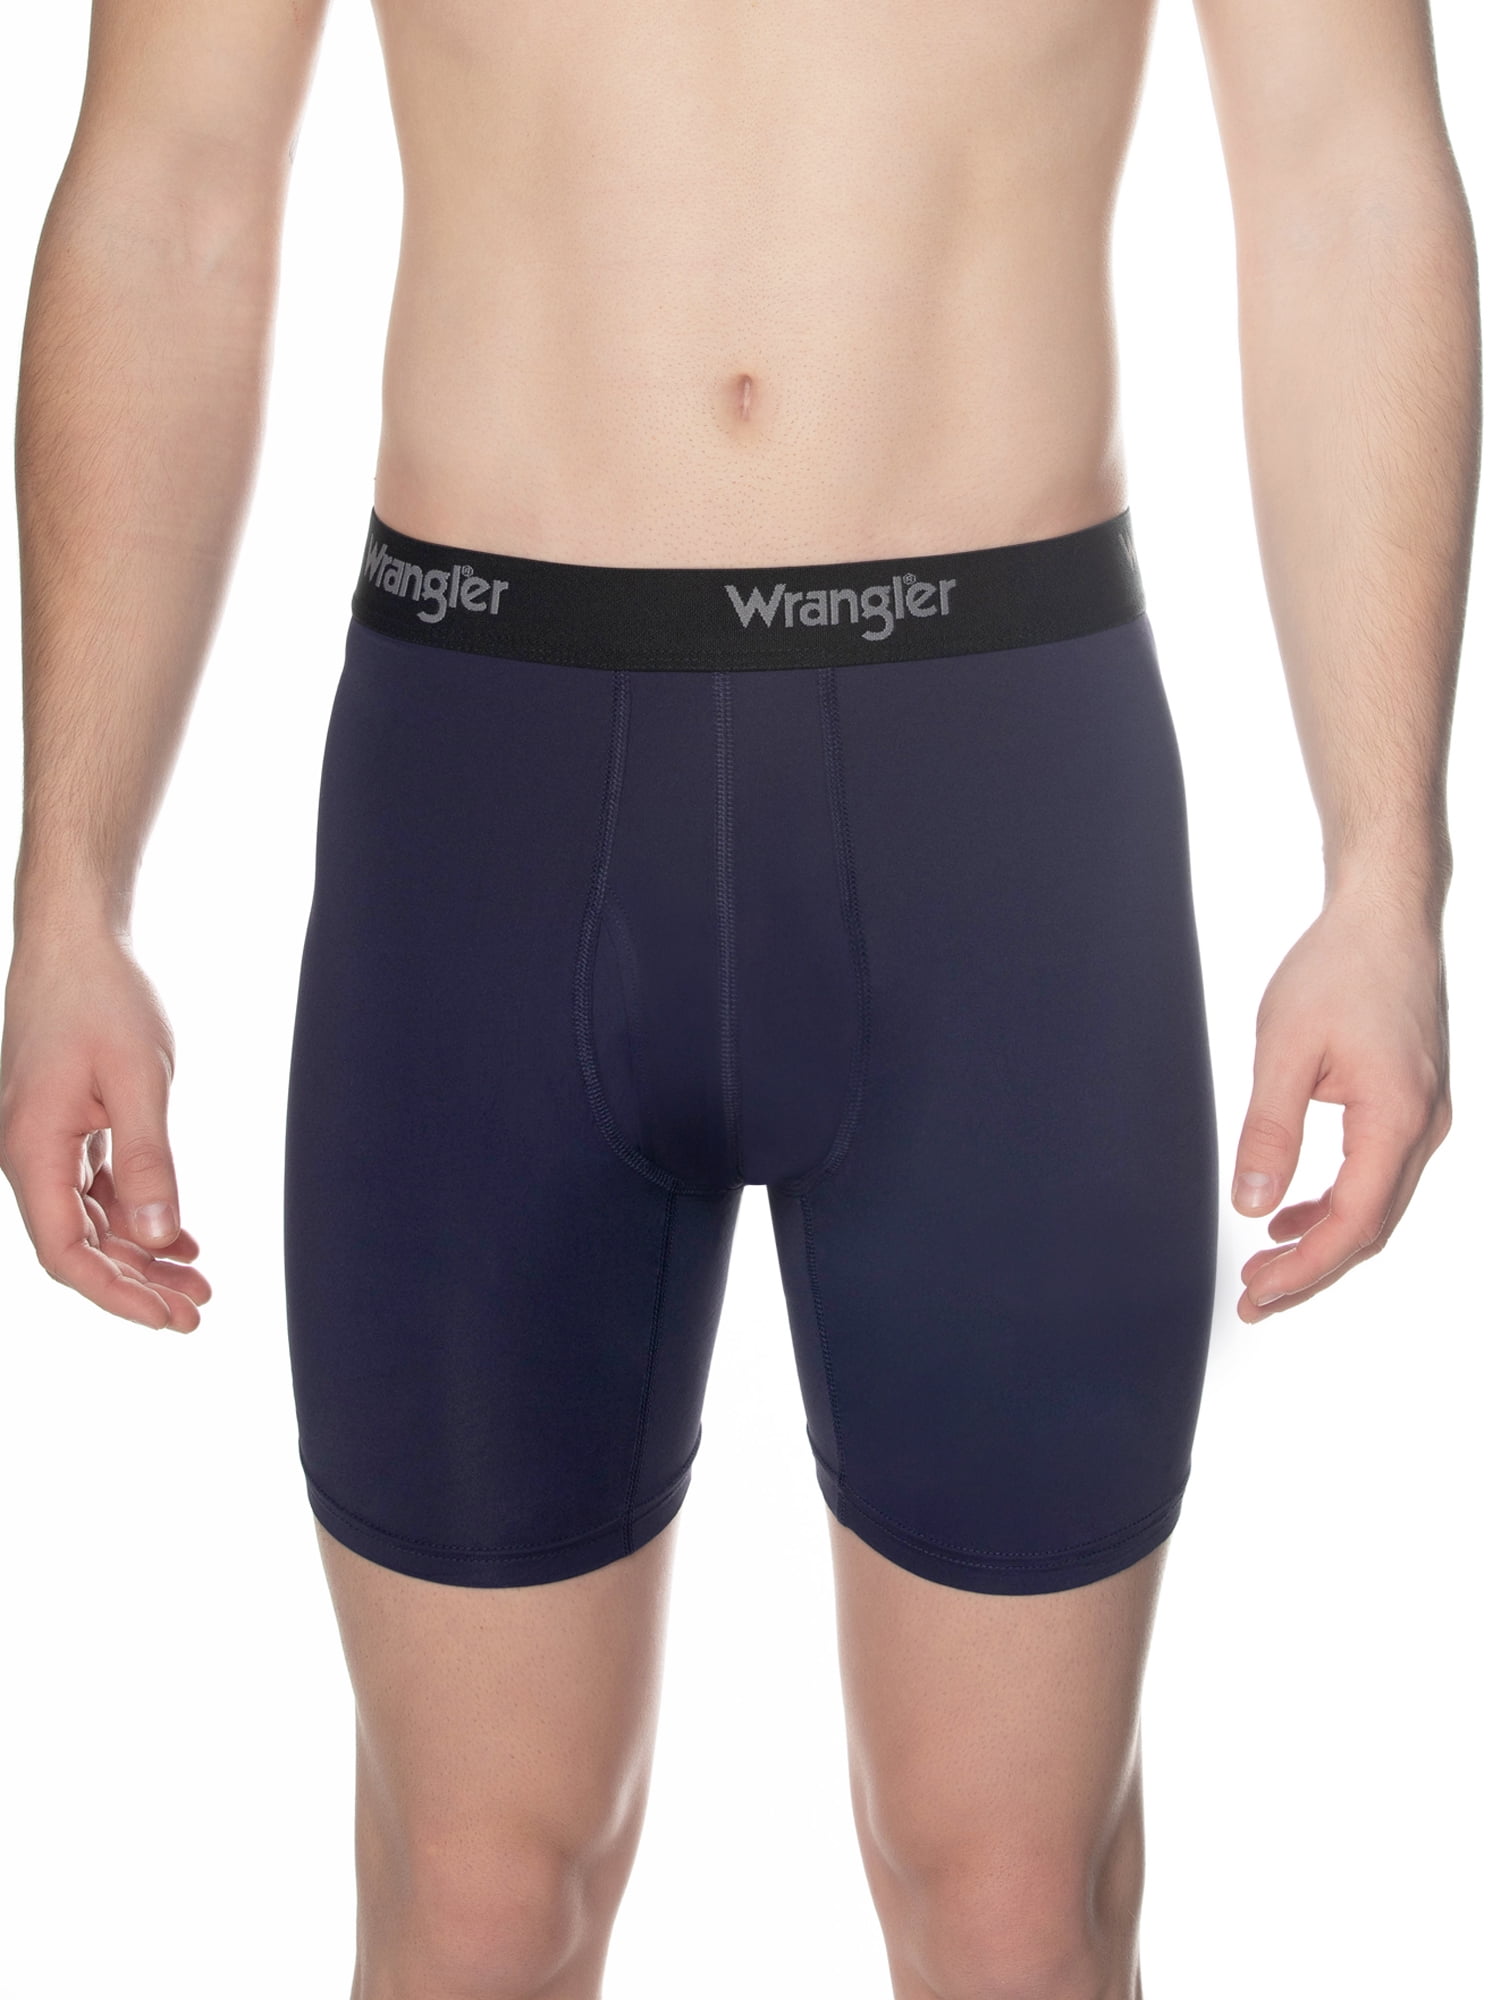 Wrangler Men's Cooling Stretch Boxer Briefs Underwear, 3 Pack - Walmart.com